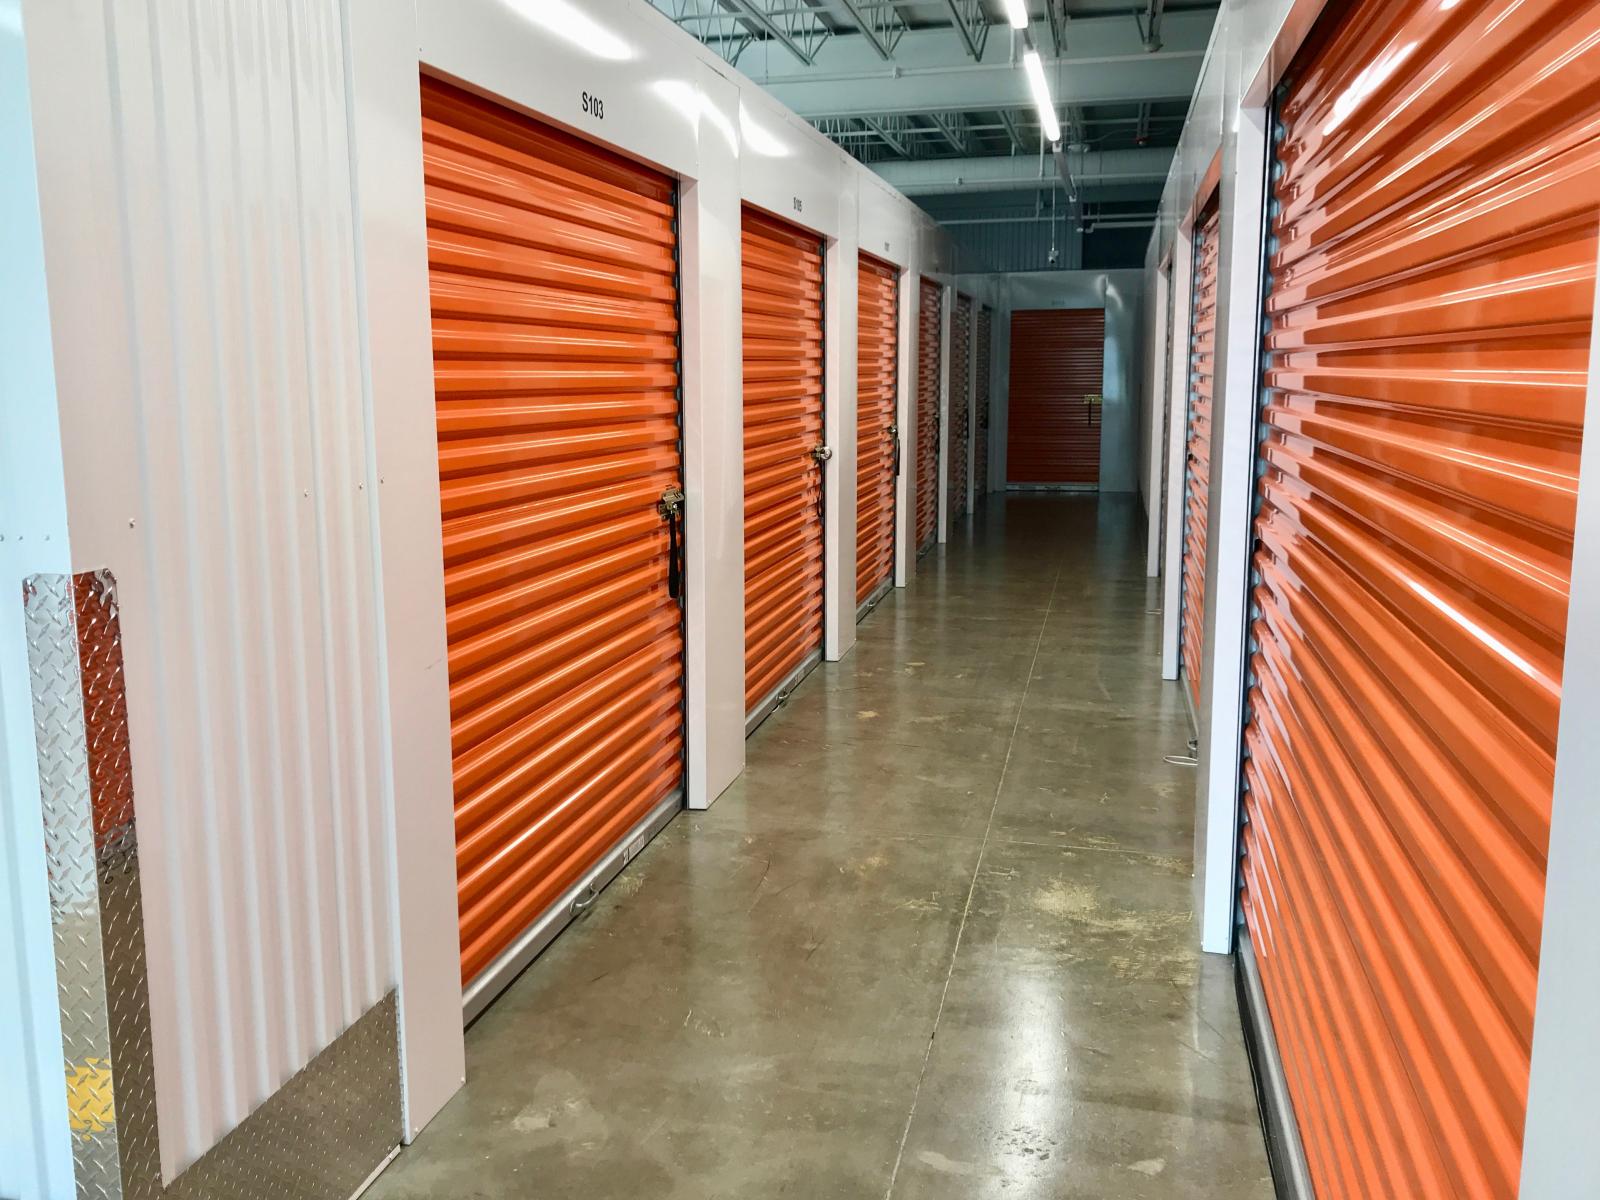 Hallway of interior access self storage units